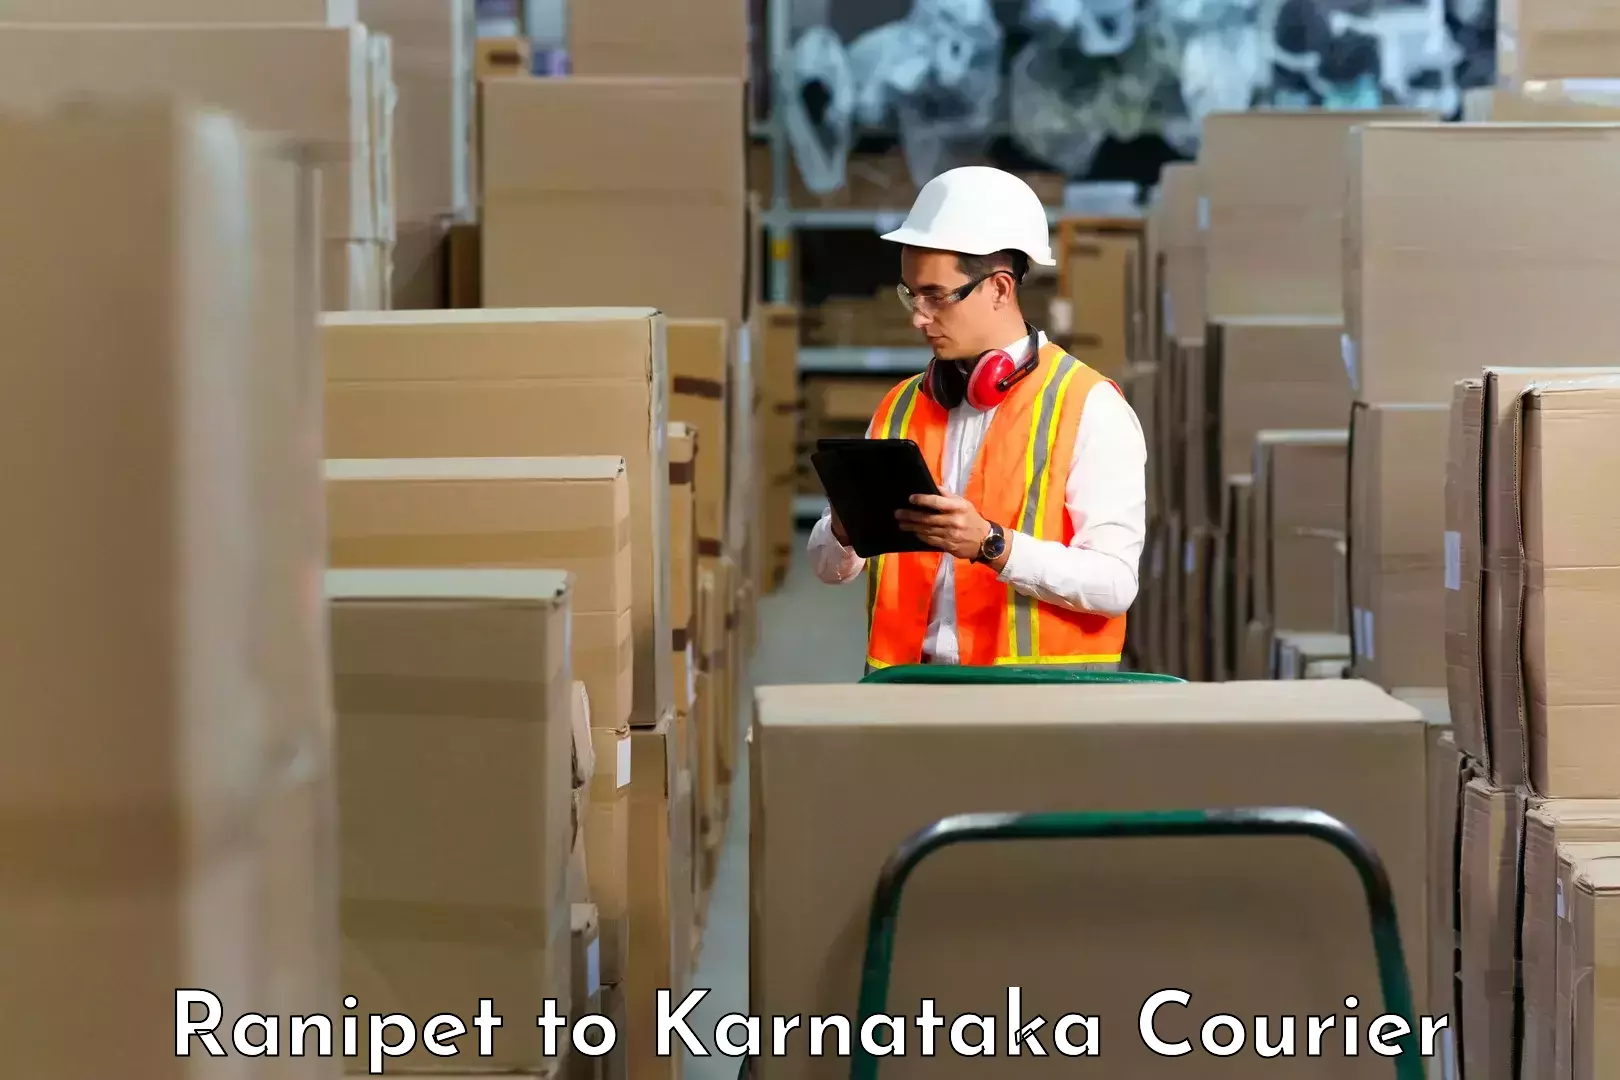 Courier service comparison Ranipet to Karnataka